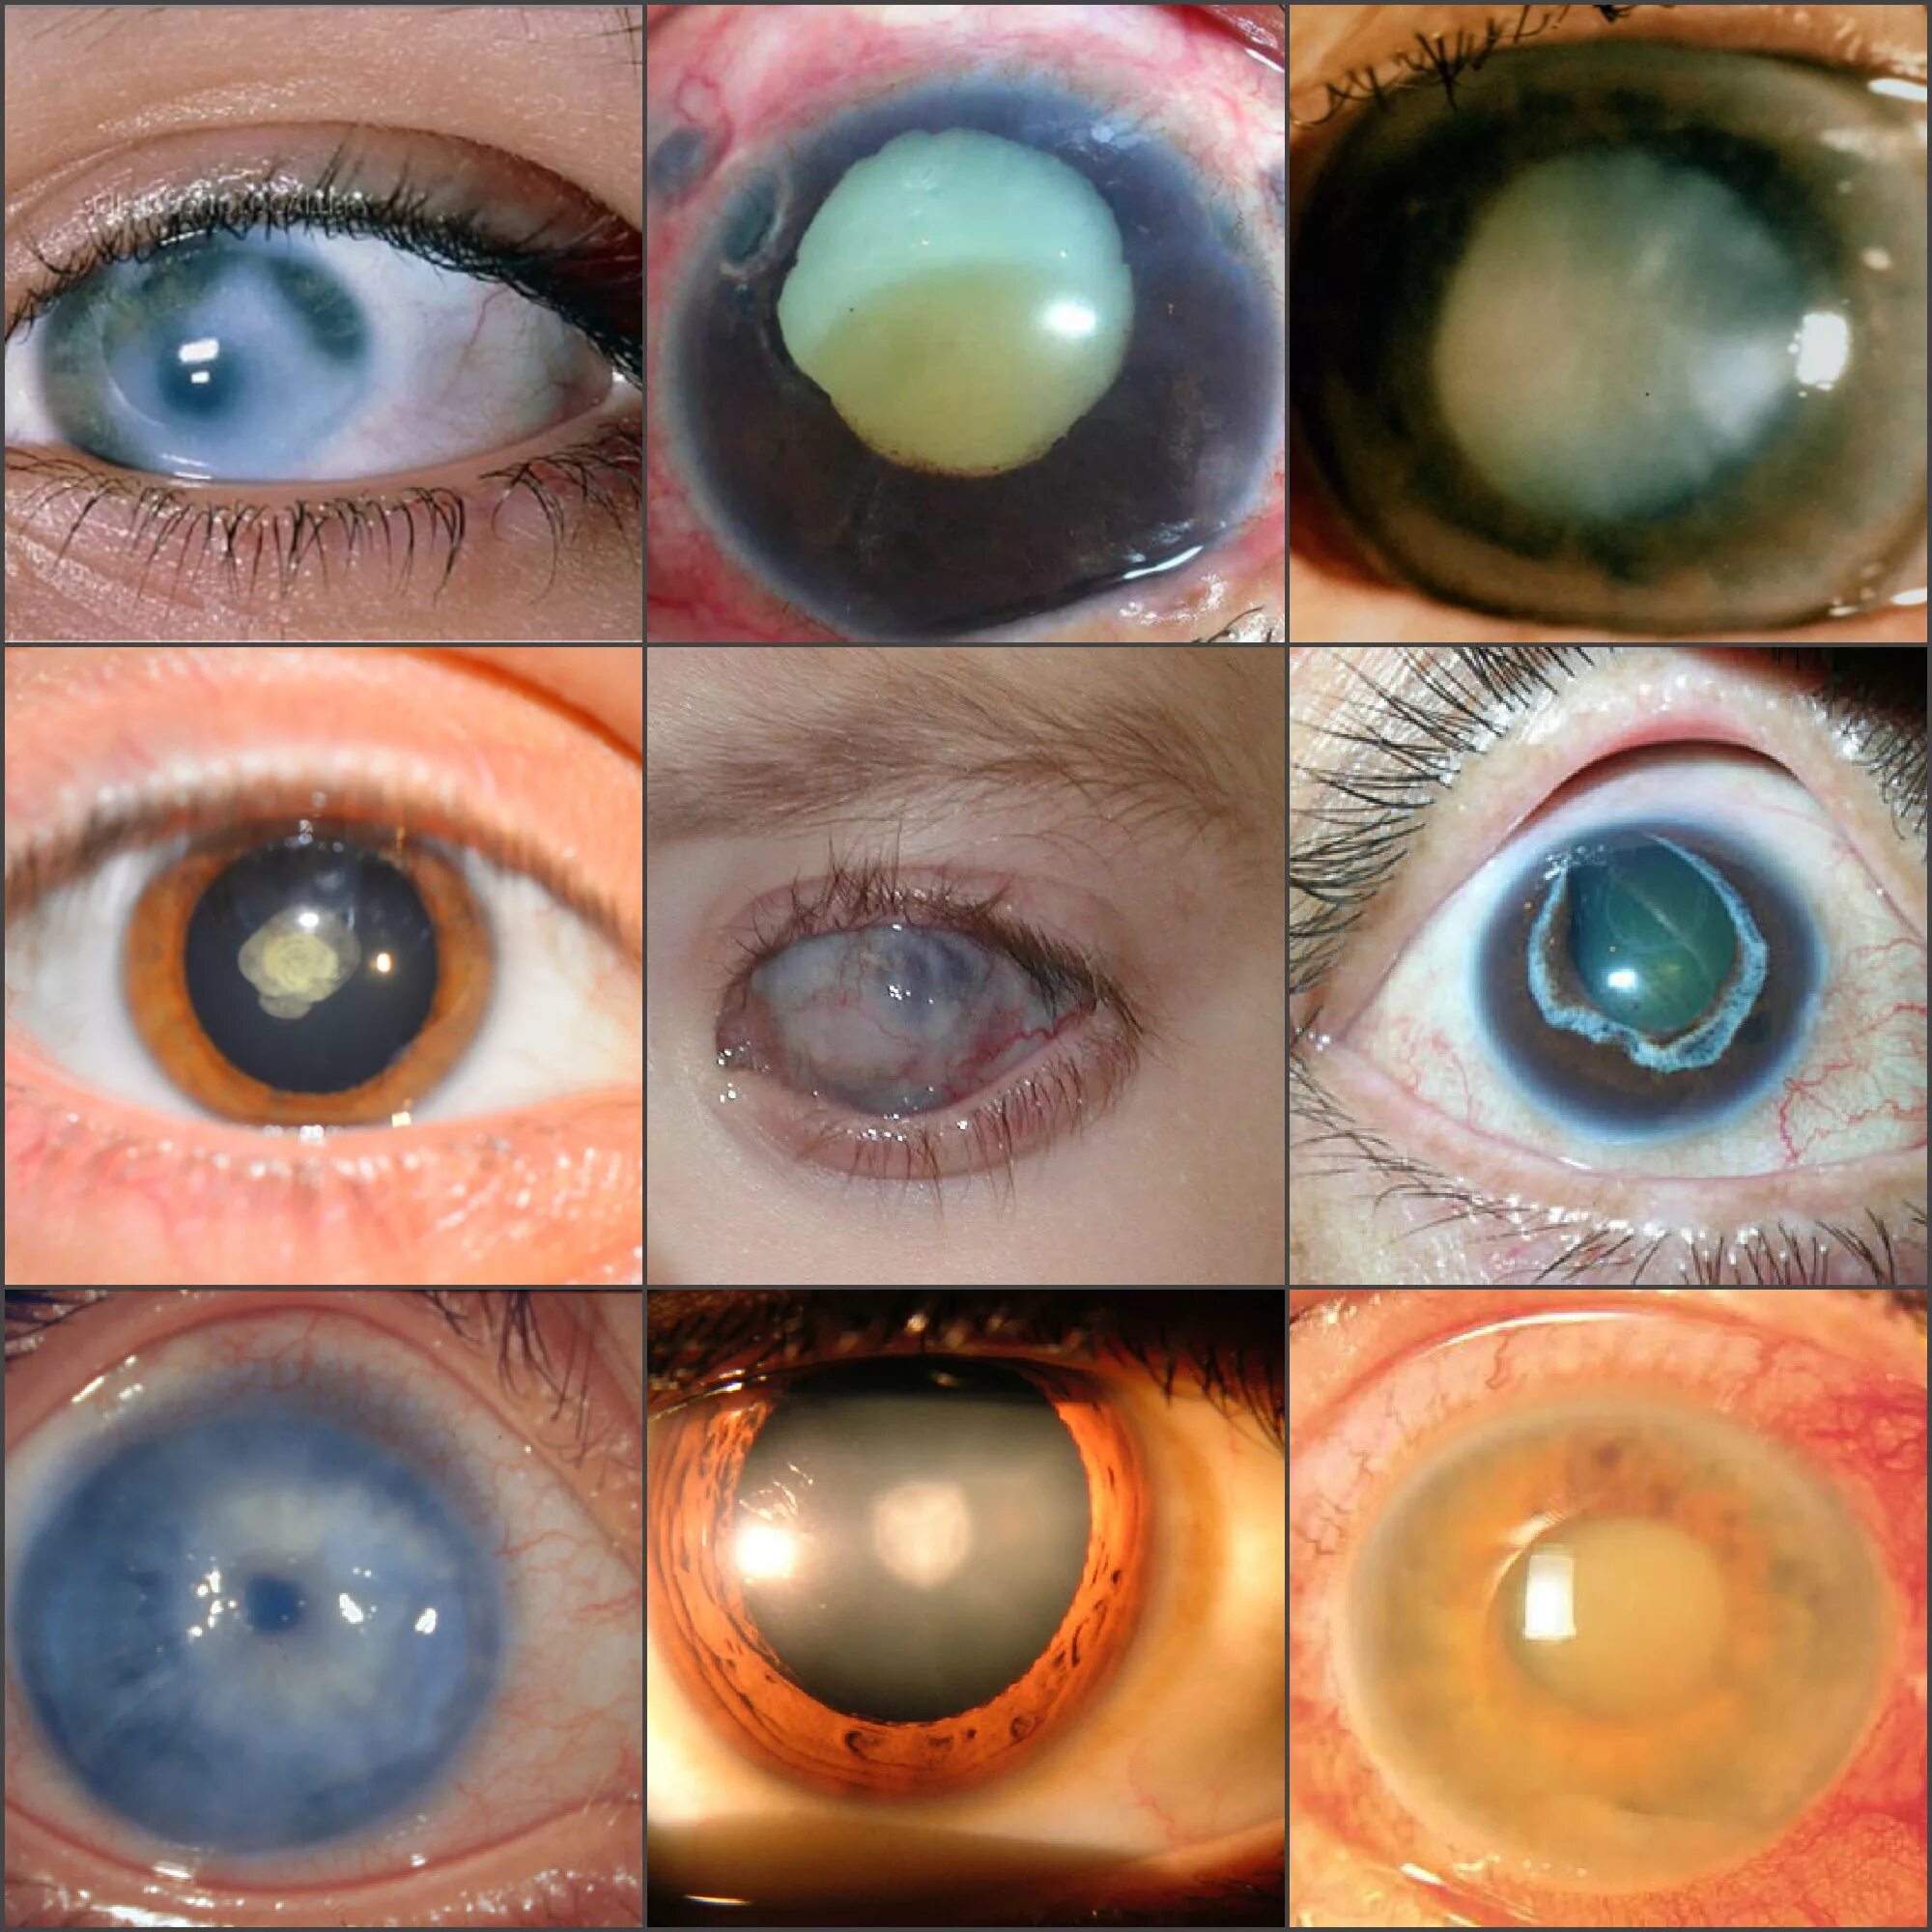 Глаукома глаза причины. Факолитическая катаракта. Миопизирующая катаракта. Закрытоугольная глаукома глаза. Факоморфическая катаракта.